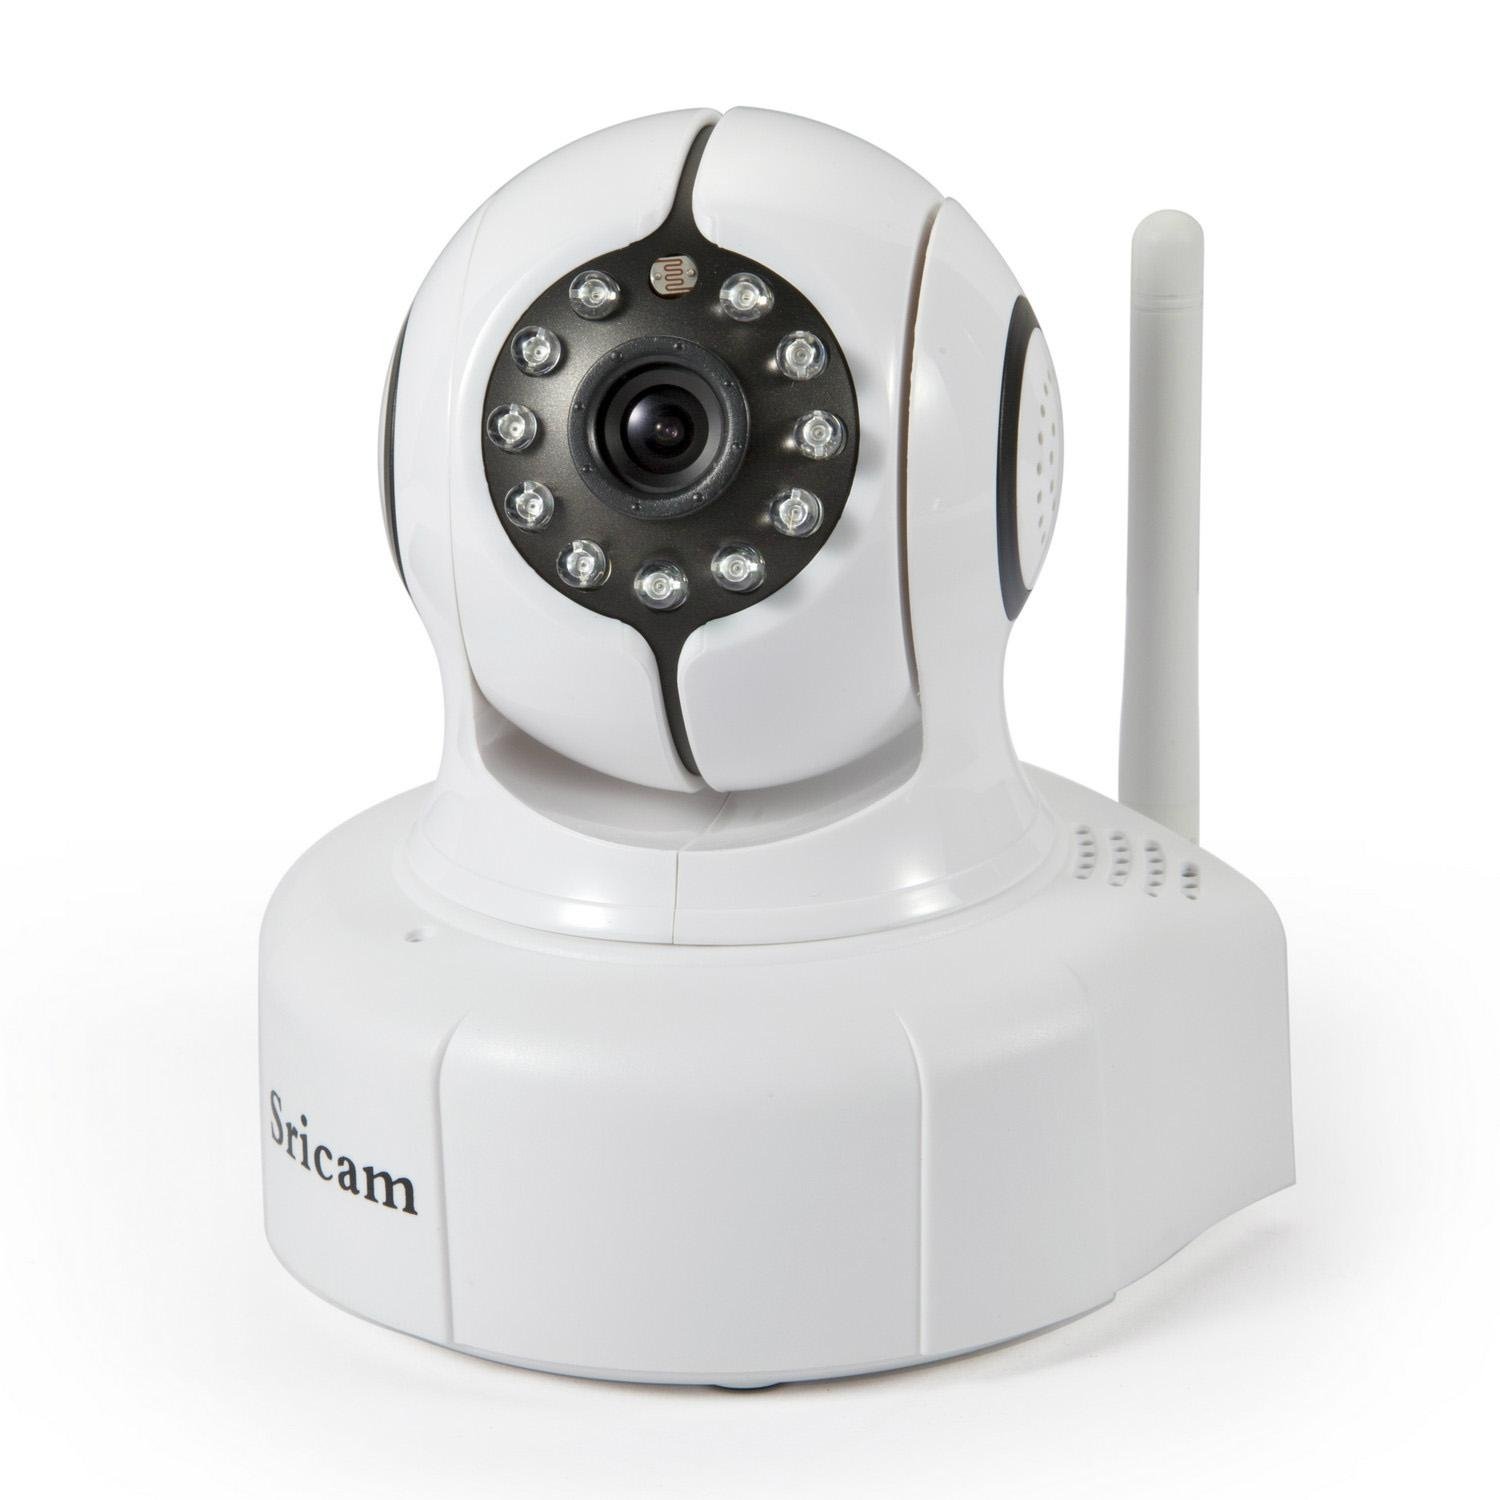 New Sricam SP011 HD 3.6mm Night vision 10m Hidden wireless ip camera 720p